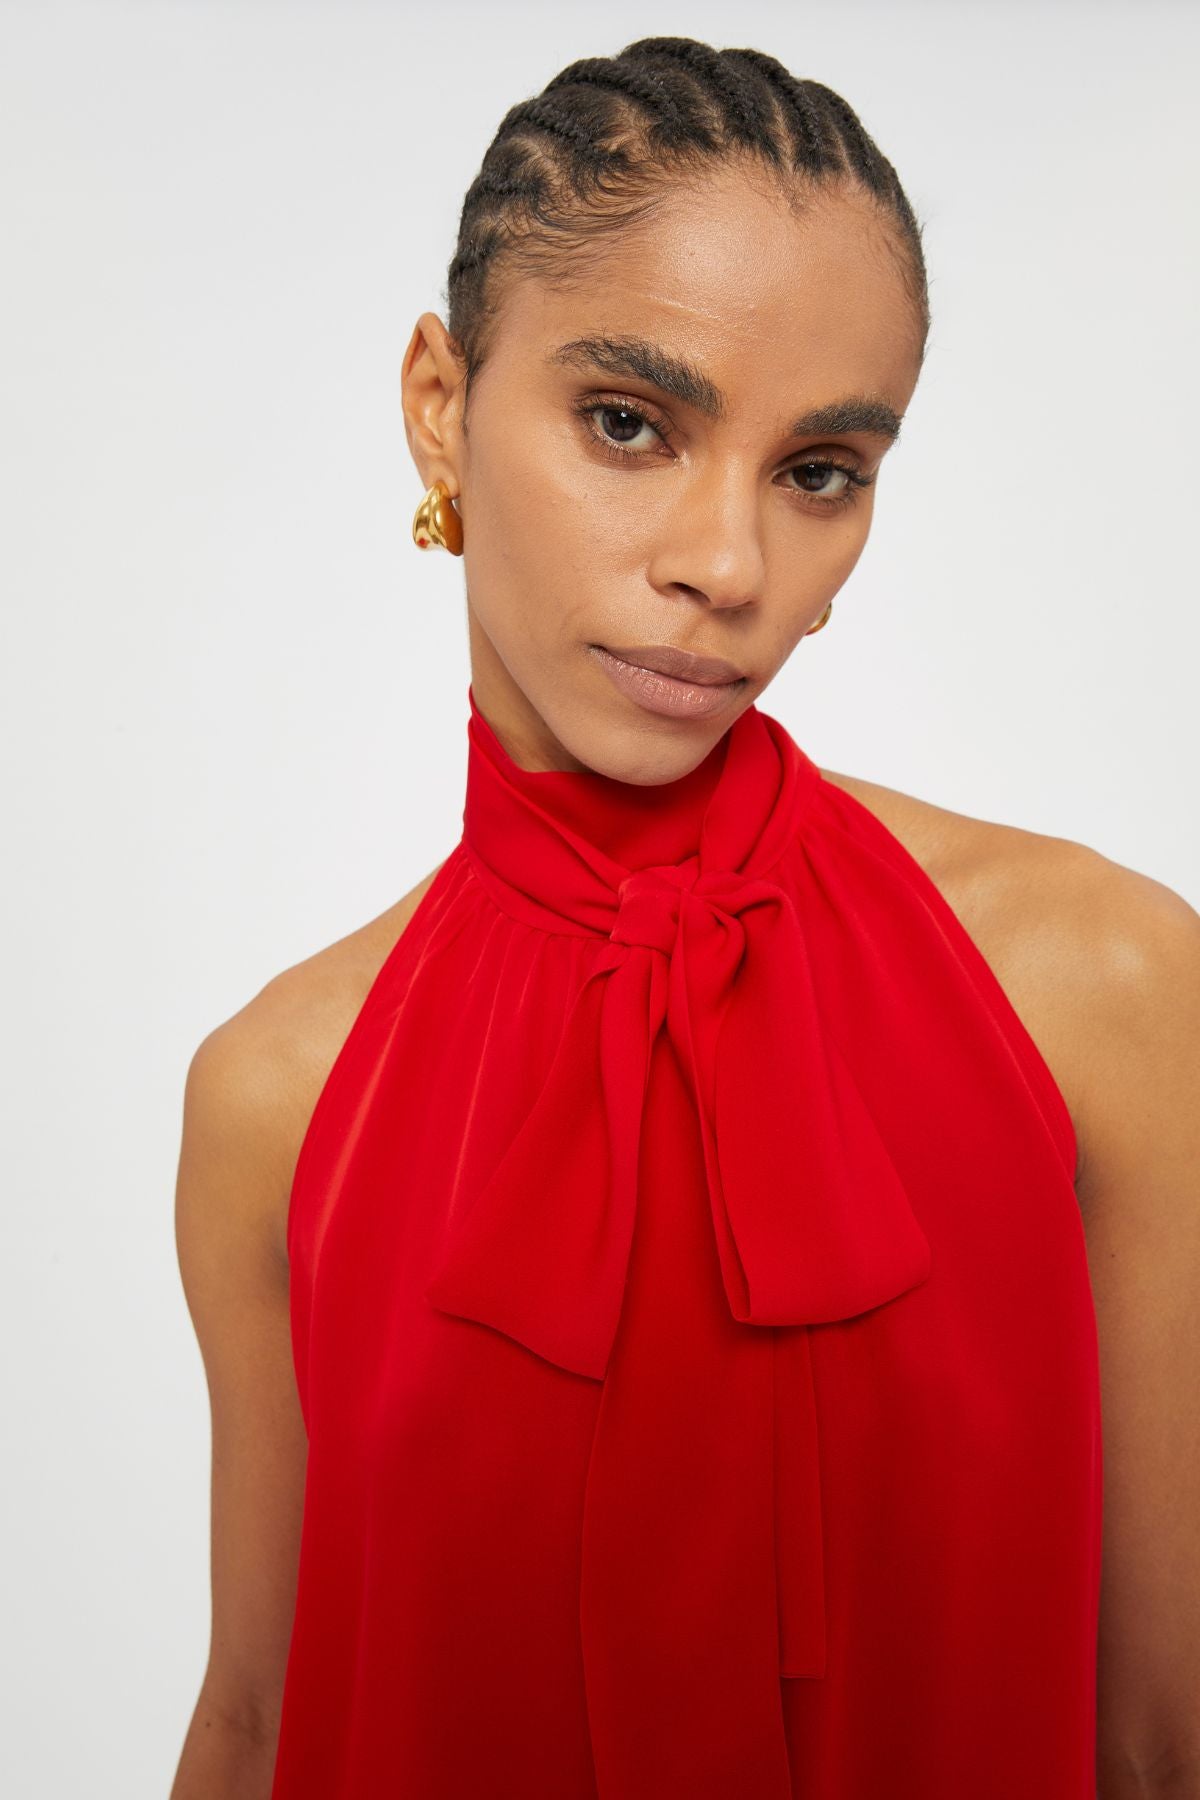 Australian women's designer Grace Tie Neck Top crafted from red silk